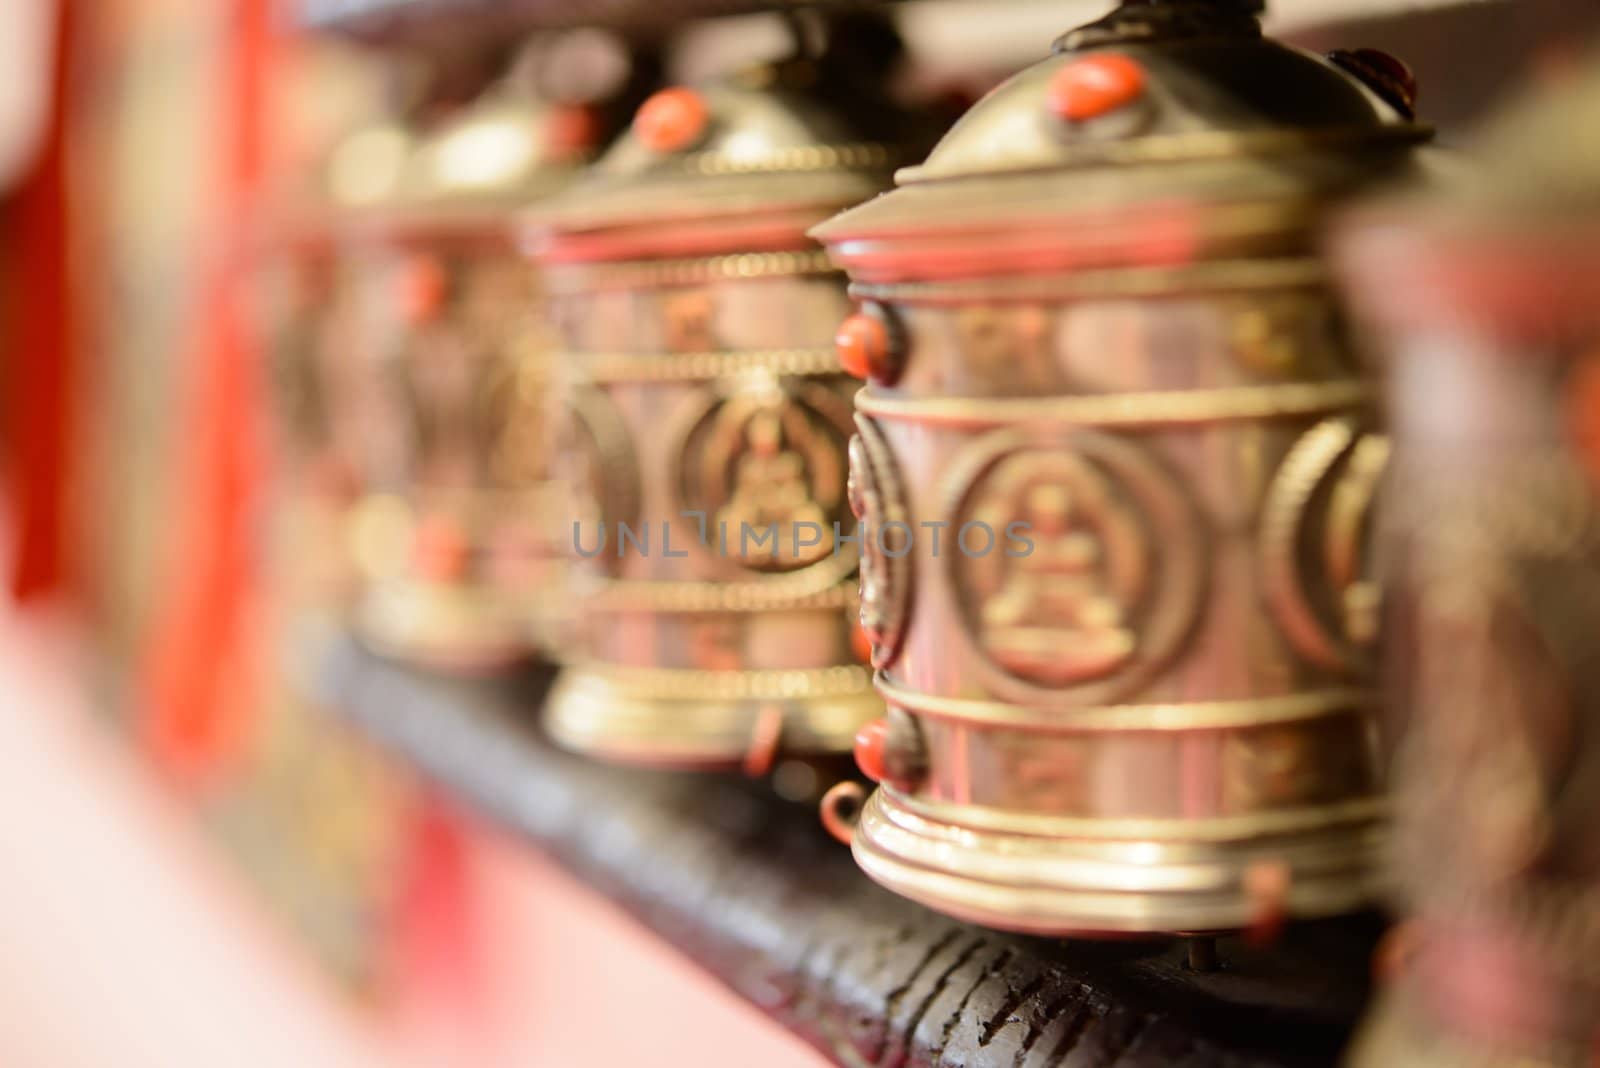 tibetan prayer wheel by mizio1970